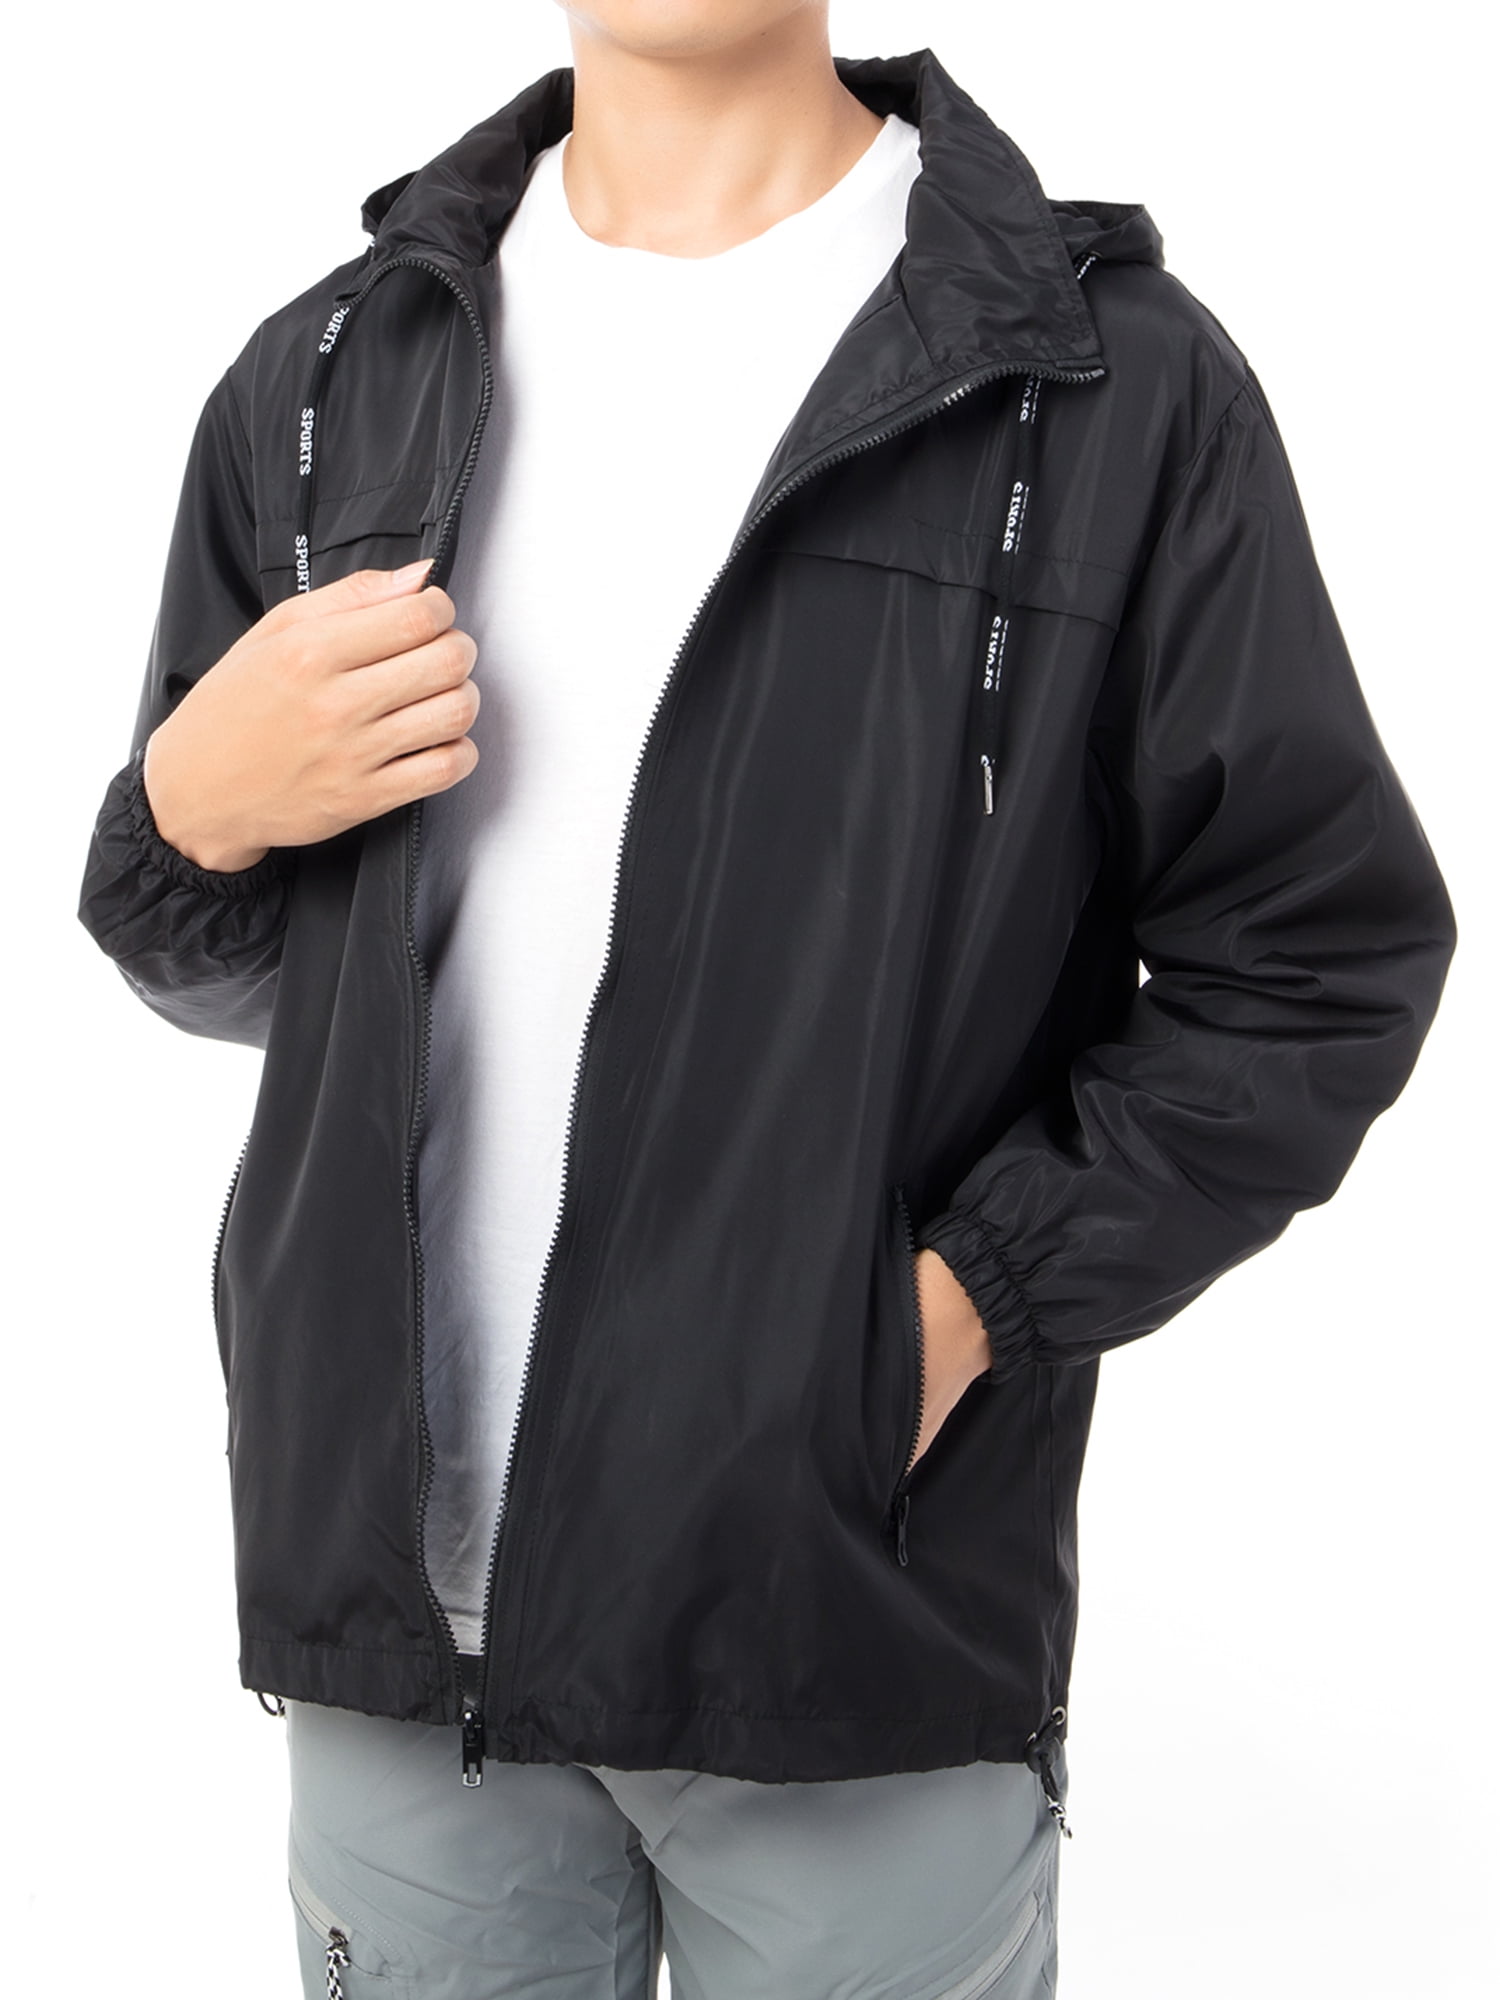 Mens Rain Jacket Coats with Hood Lightweight Waterproof Windbreaker